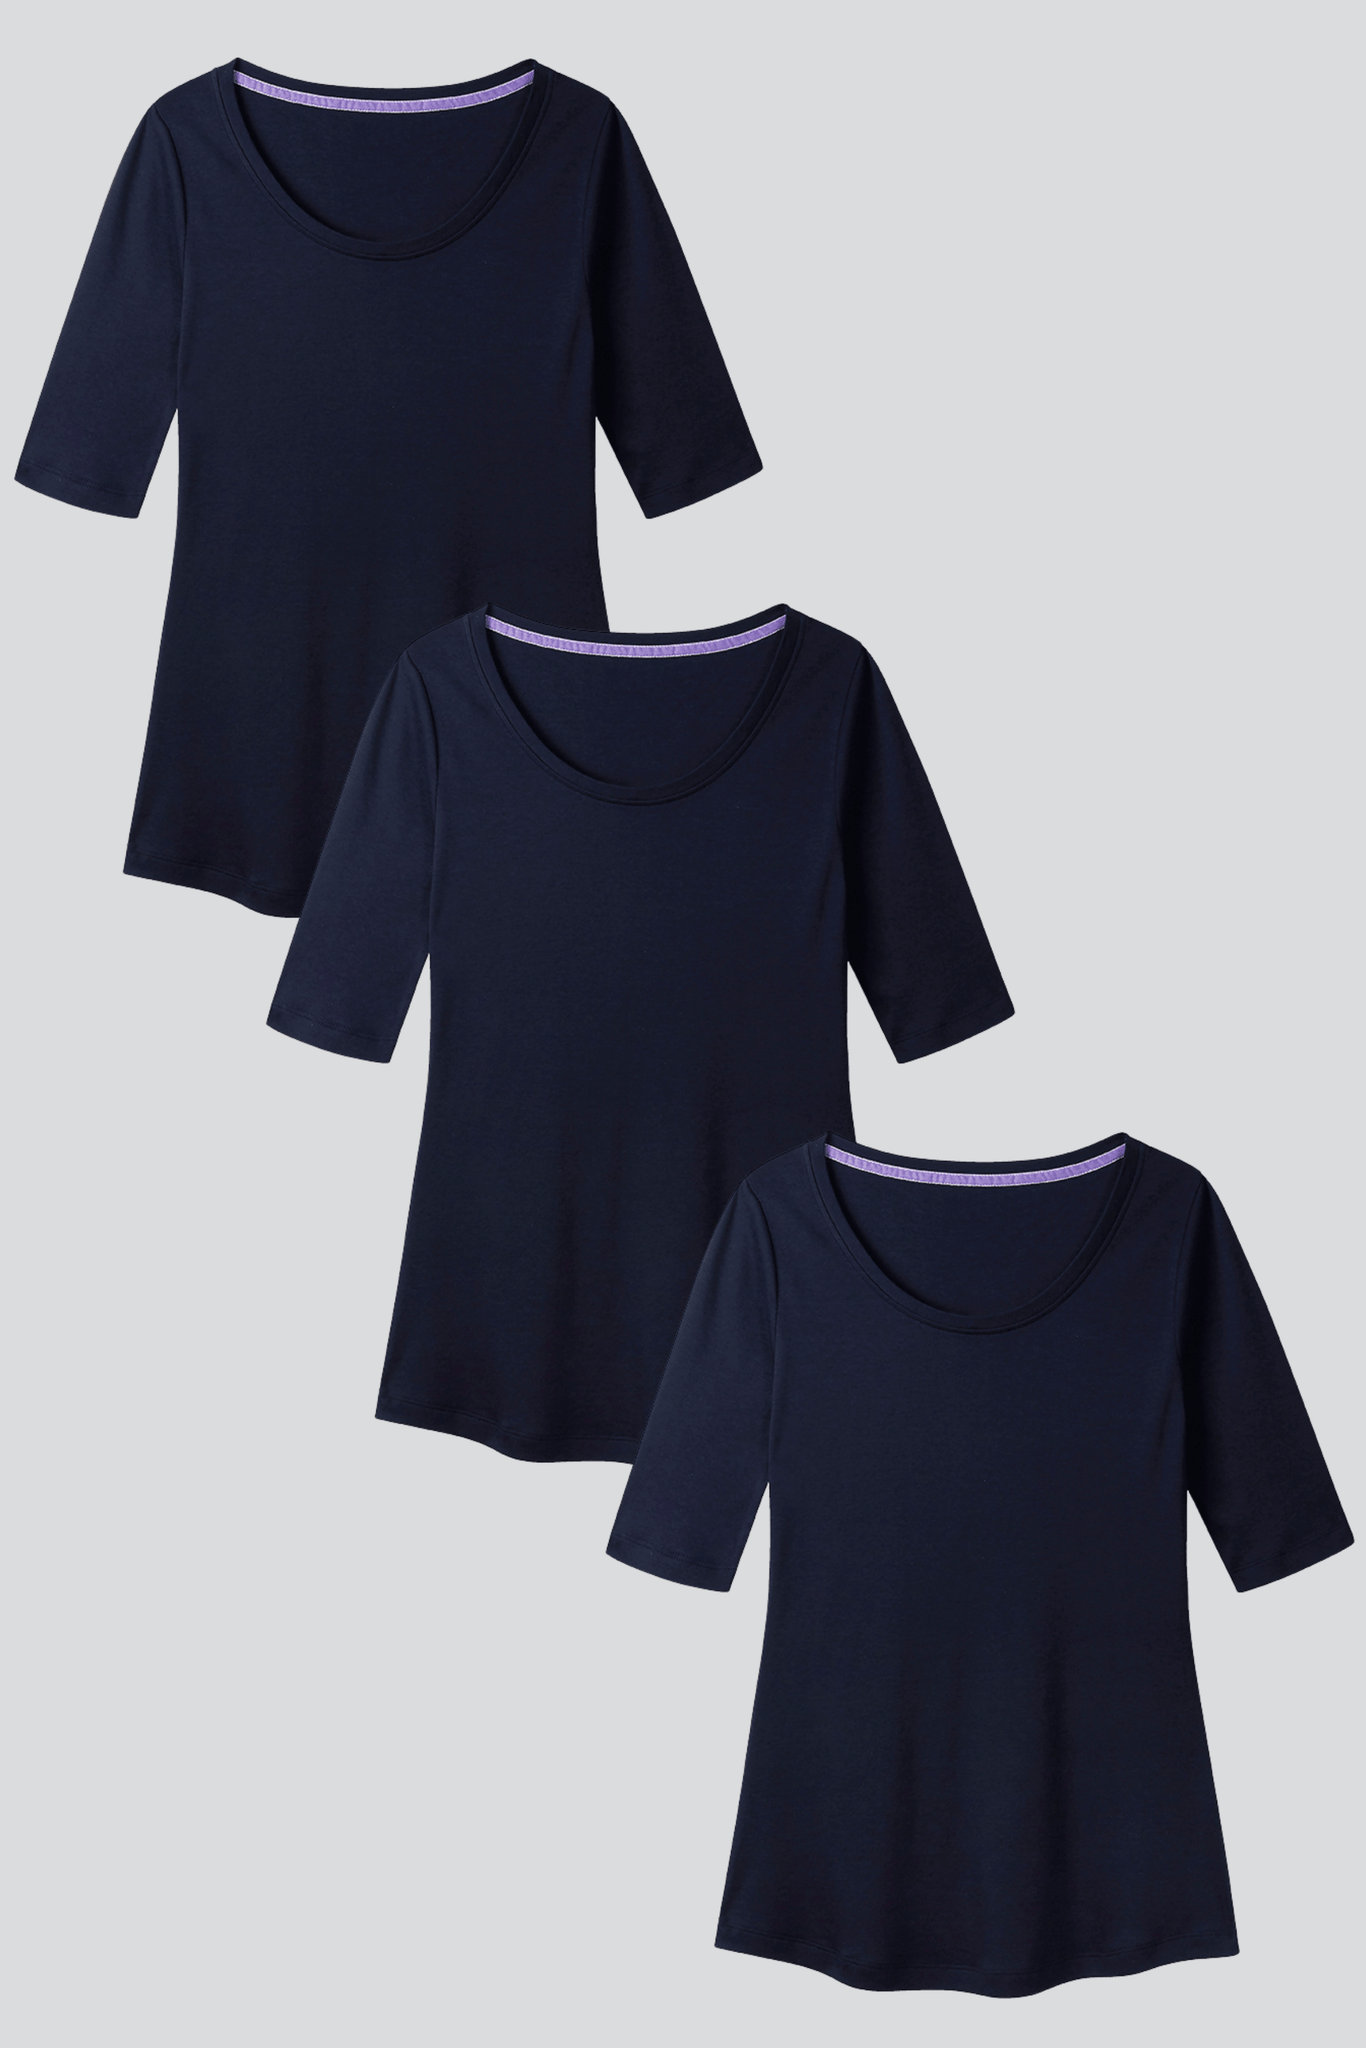 scoop neck lavender | Clothing Ladies Hill Lavender t-shirt luxury